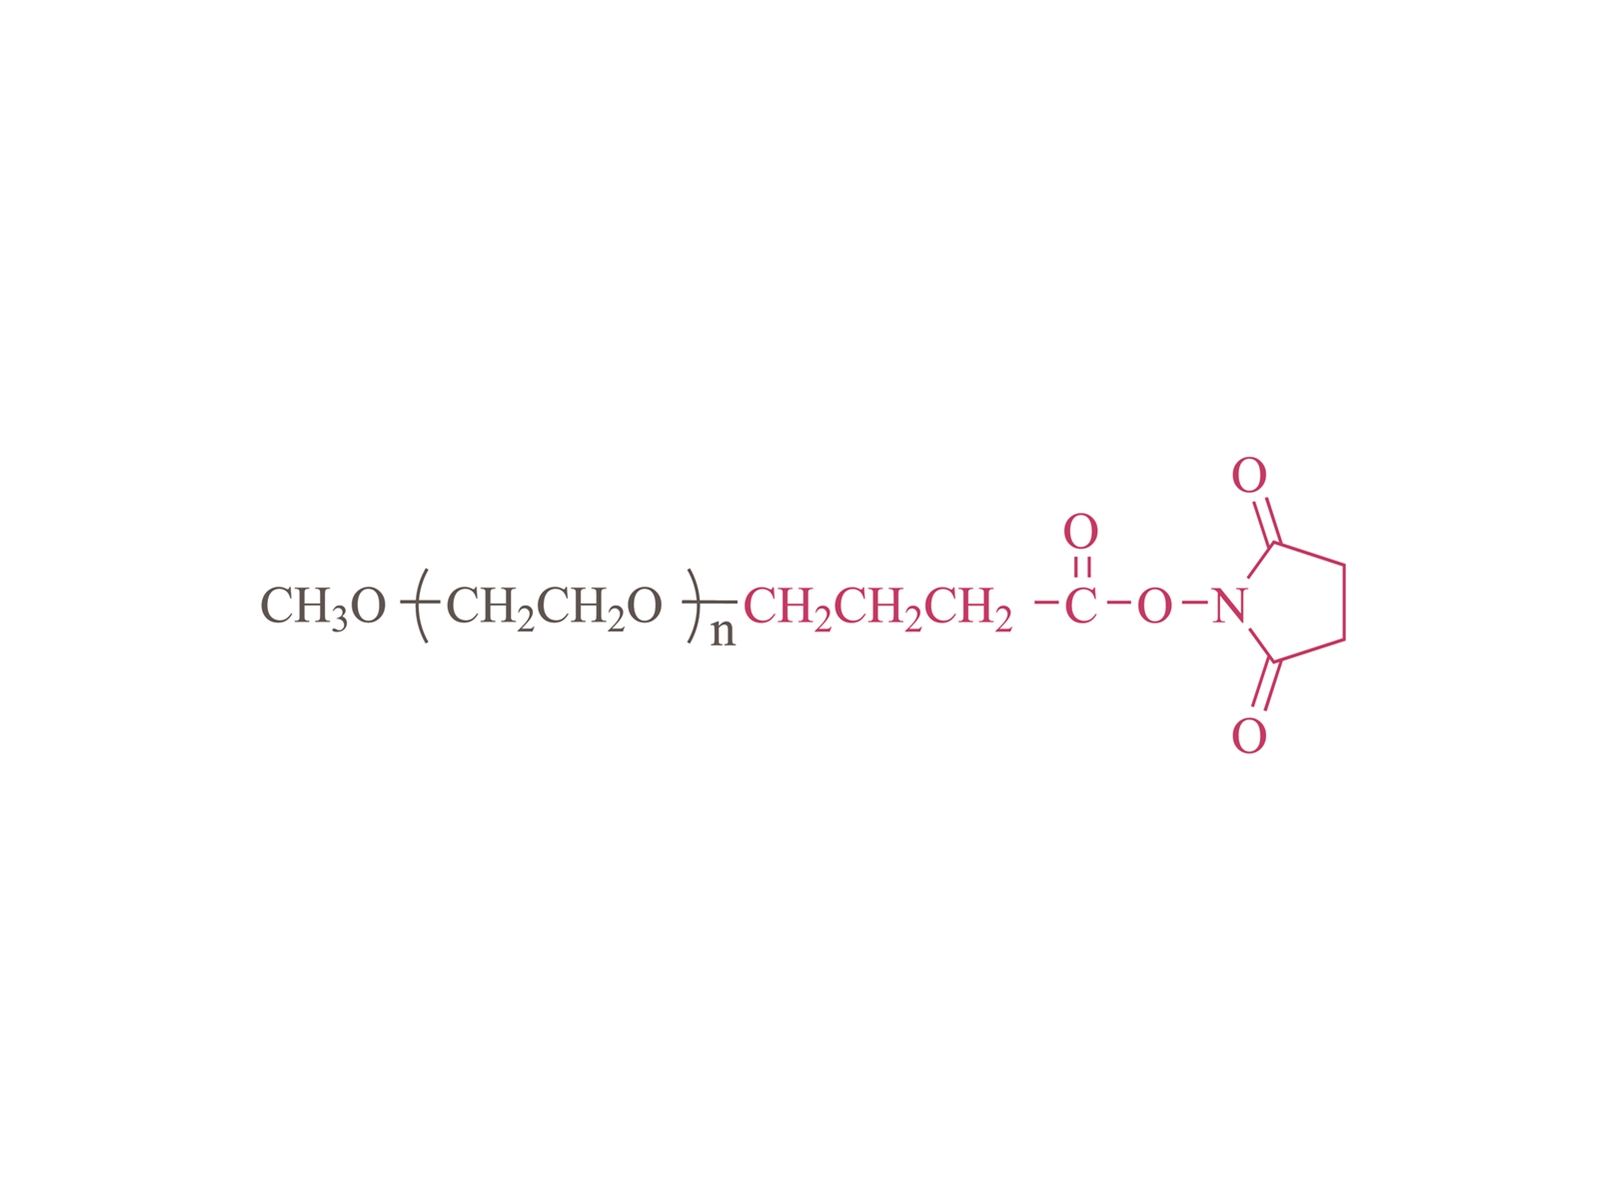 Methoxypoly(ethylene glycol) succinimidyl butanoate [mPEG-SBA]